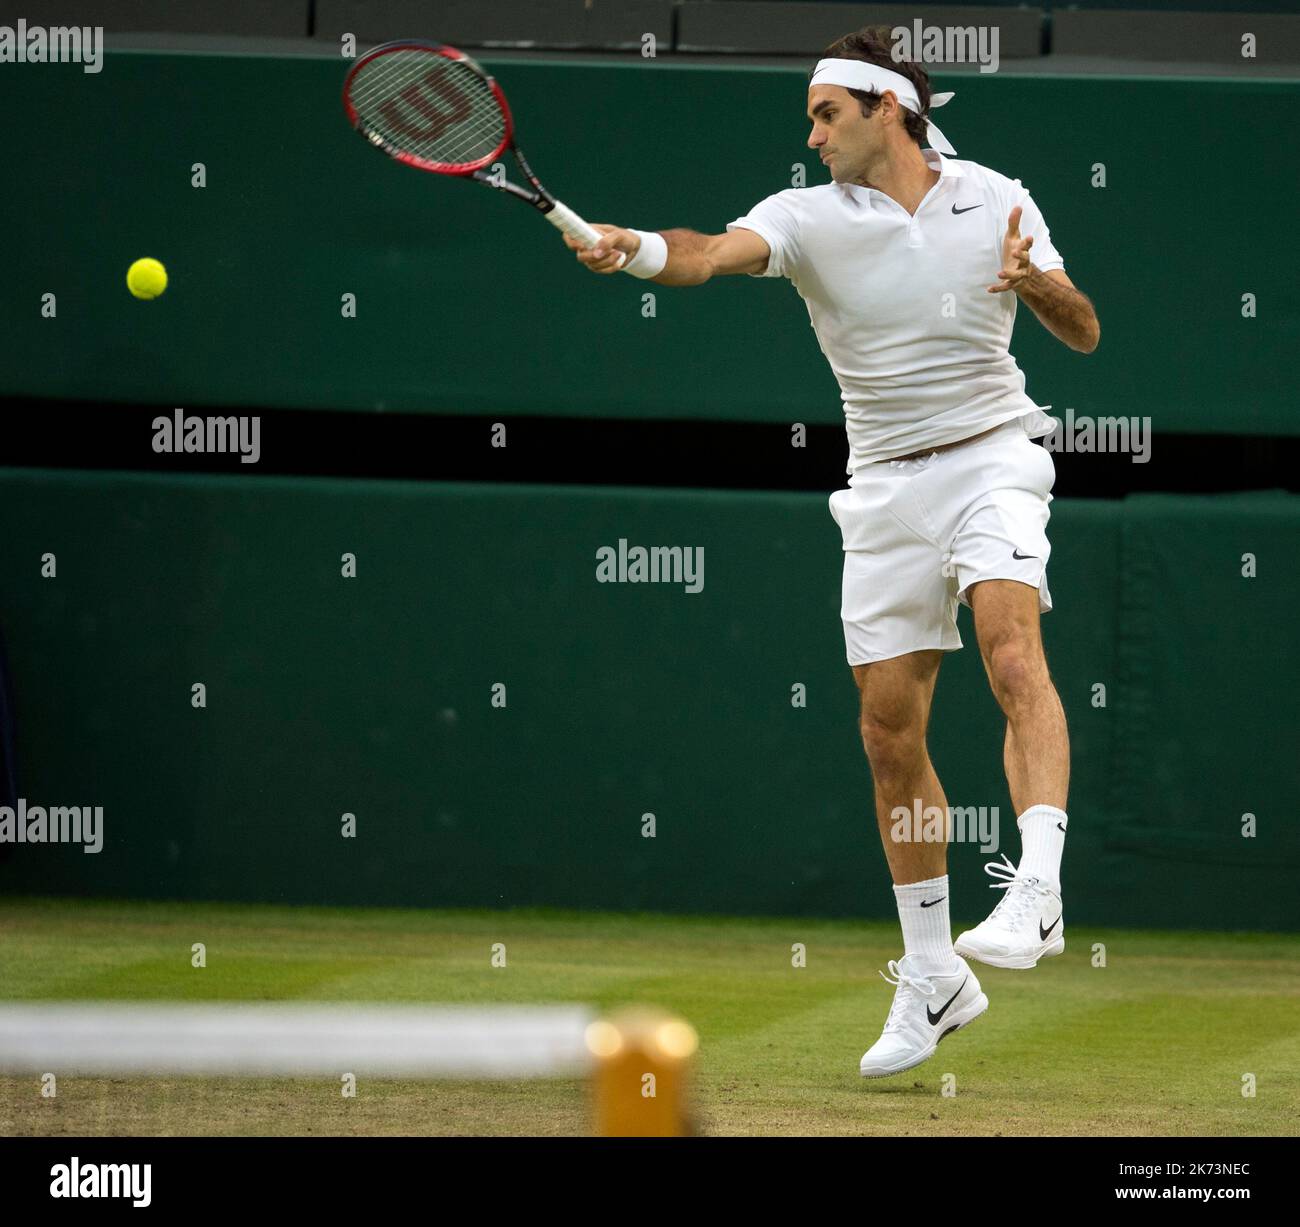 01/07/2016. Wimbledon 2016, Mens singles, Roger Federer (SUI) v Dan Evans (GBR), Centre Court. Roger Federer in action during the match. Stock Photo